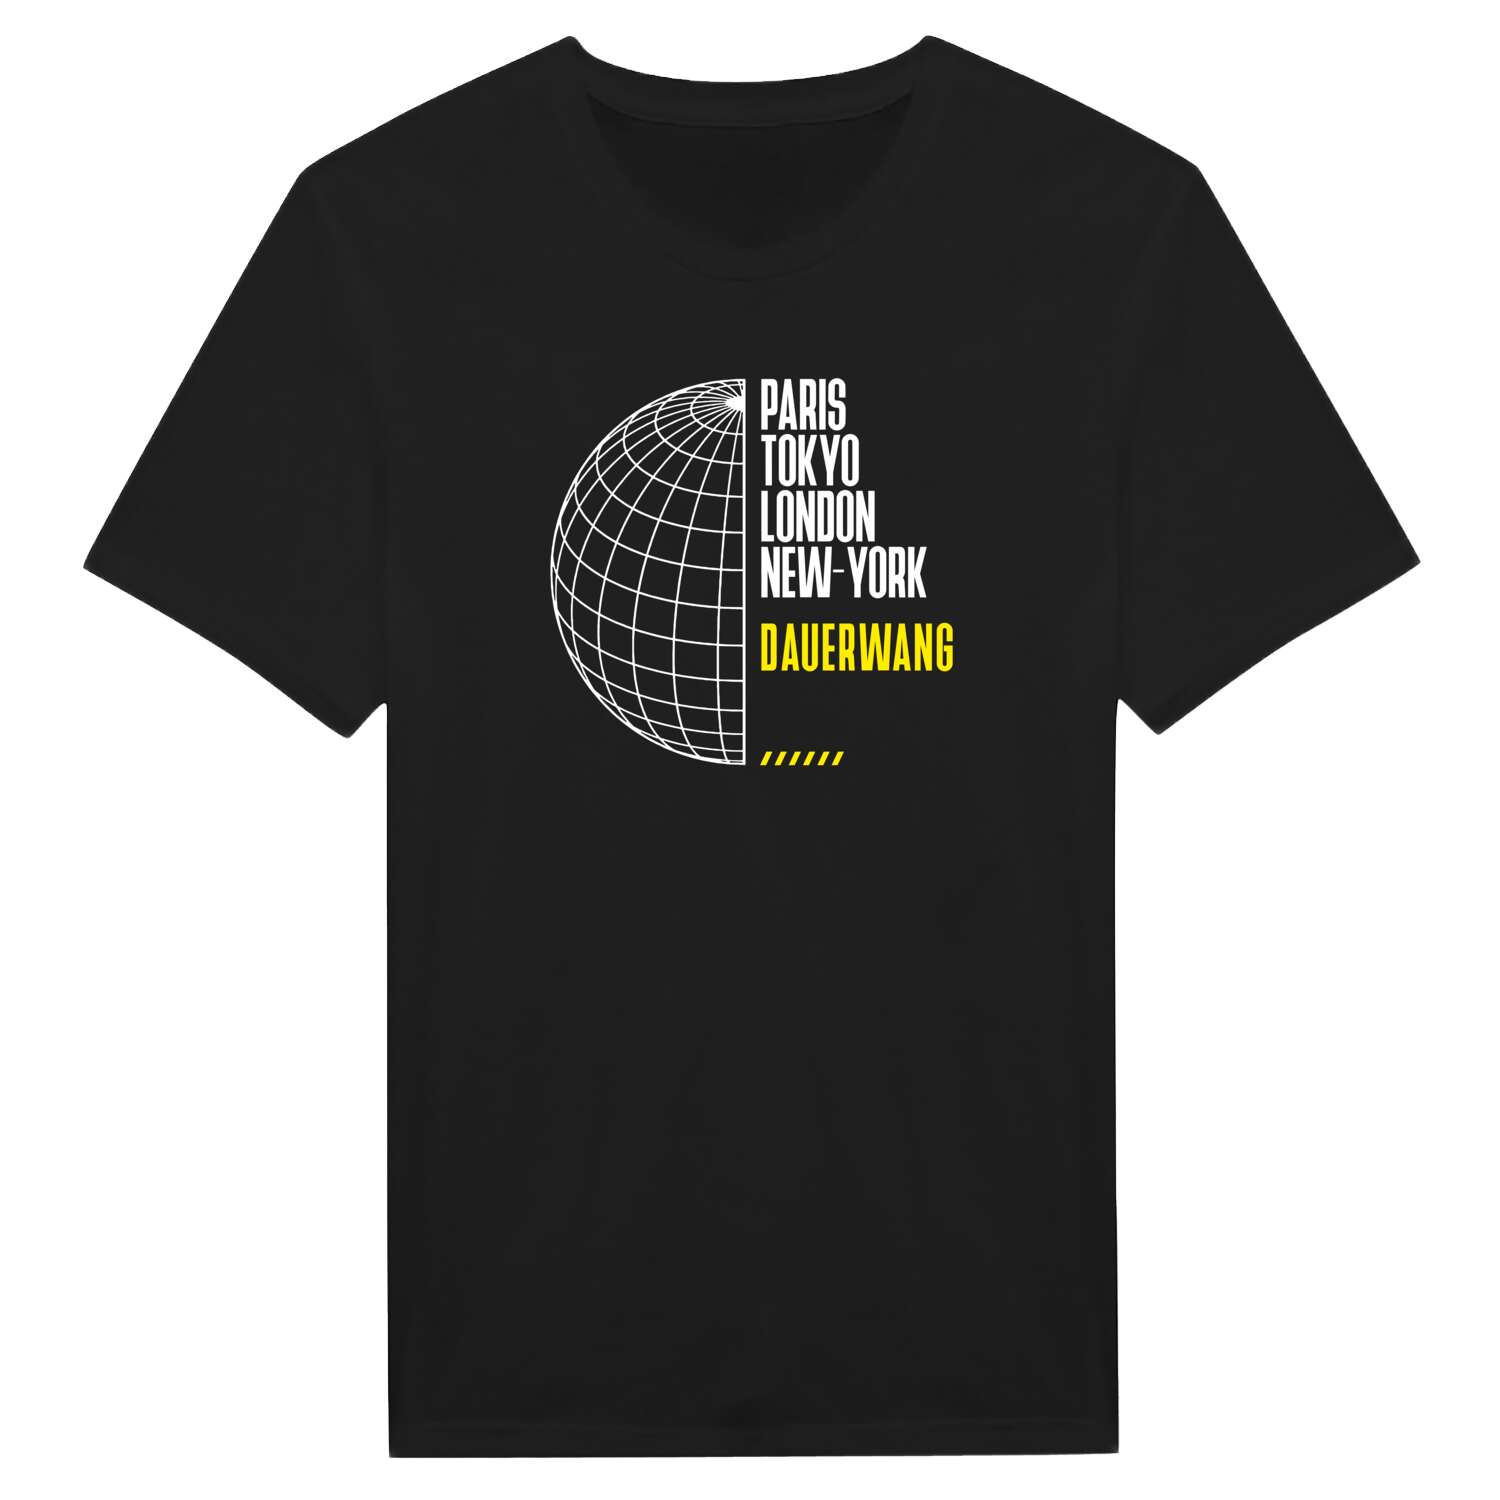 Dauerwang T-Shirt »Paris Tokyo London«